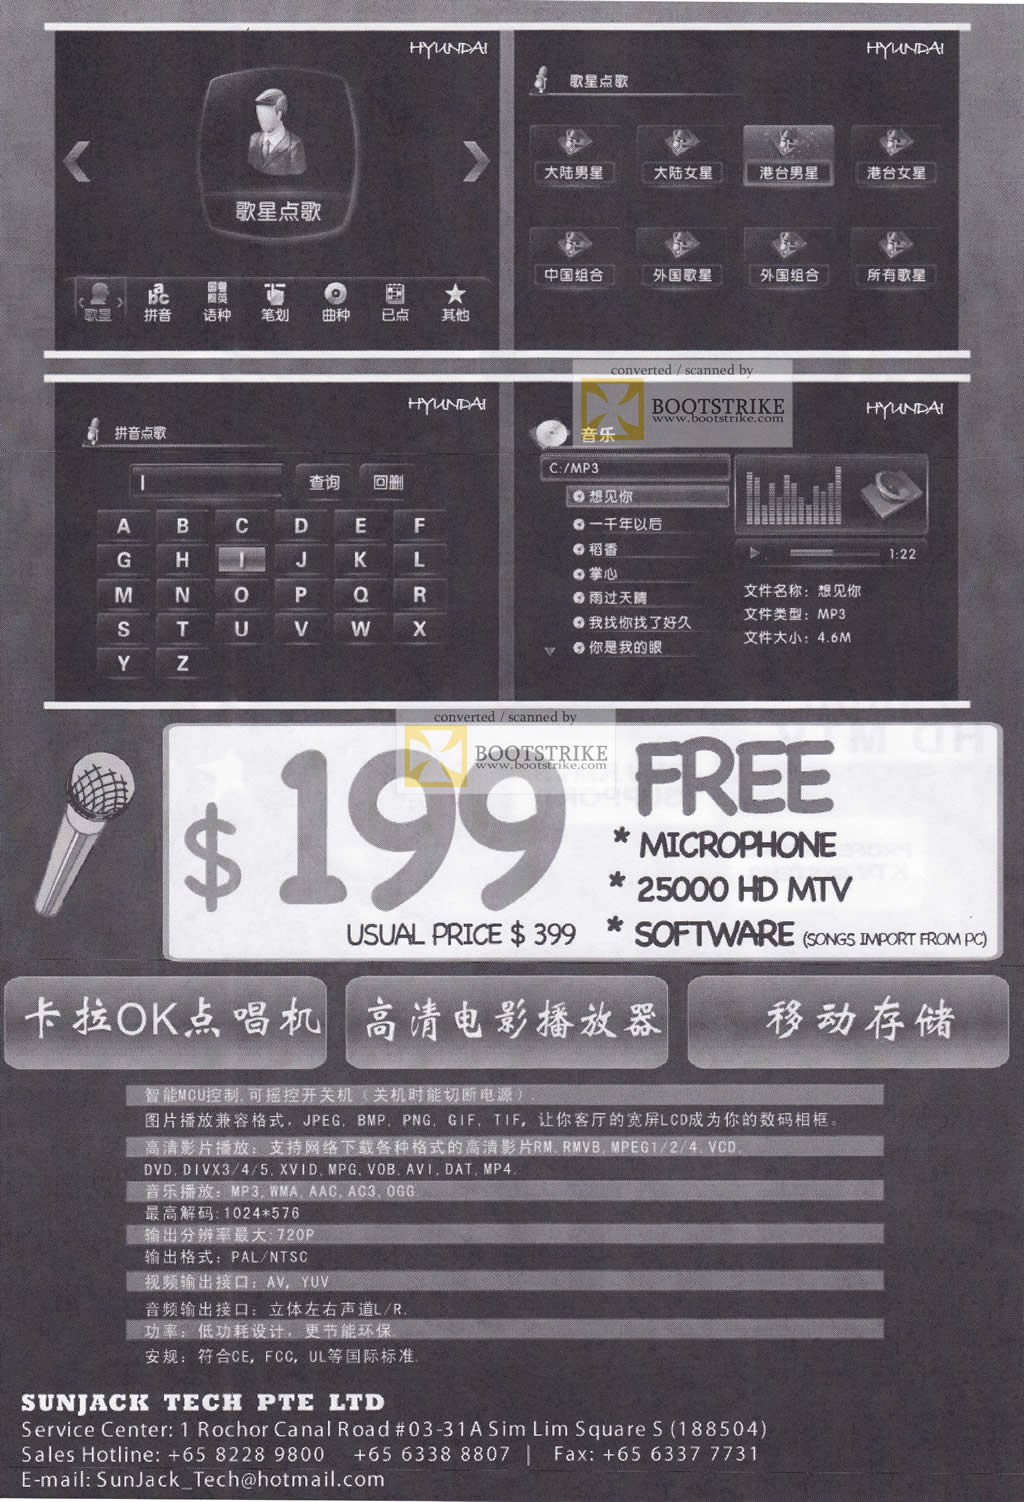 Sitex 2009 price list image brochure of Sunjack Hydundai Karaoke HD MTV RMVB KTV System 2